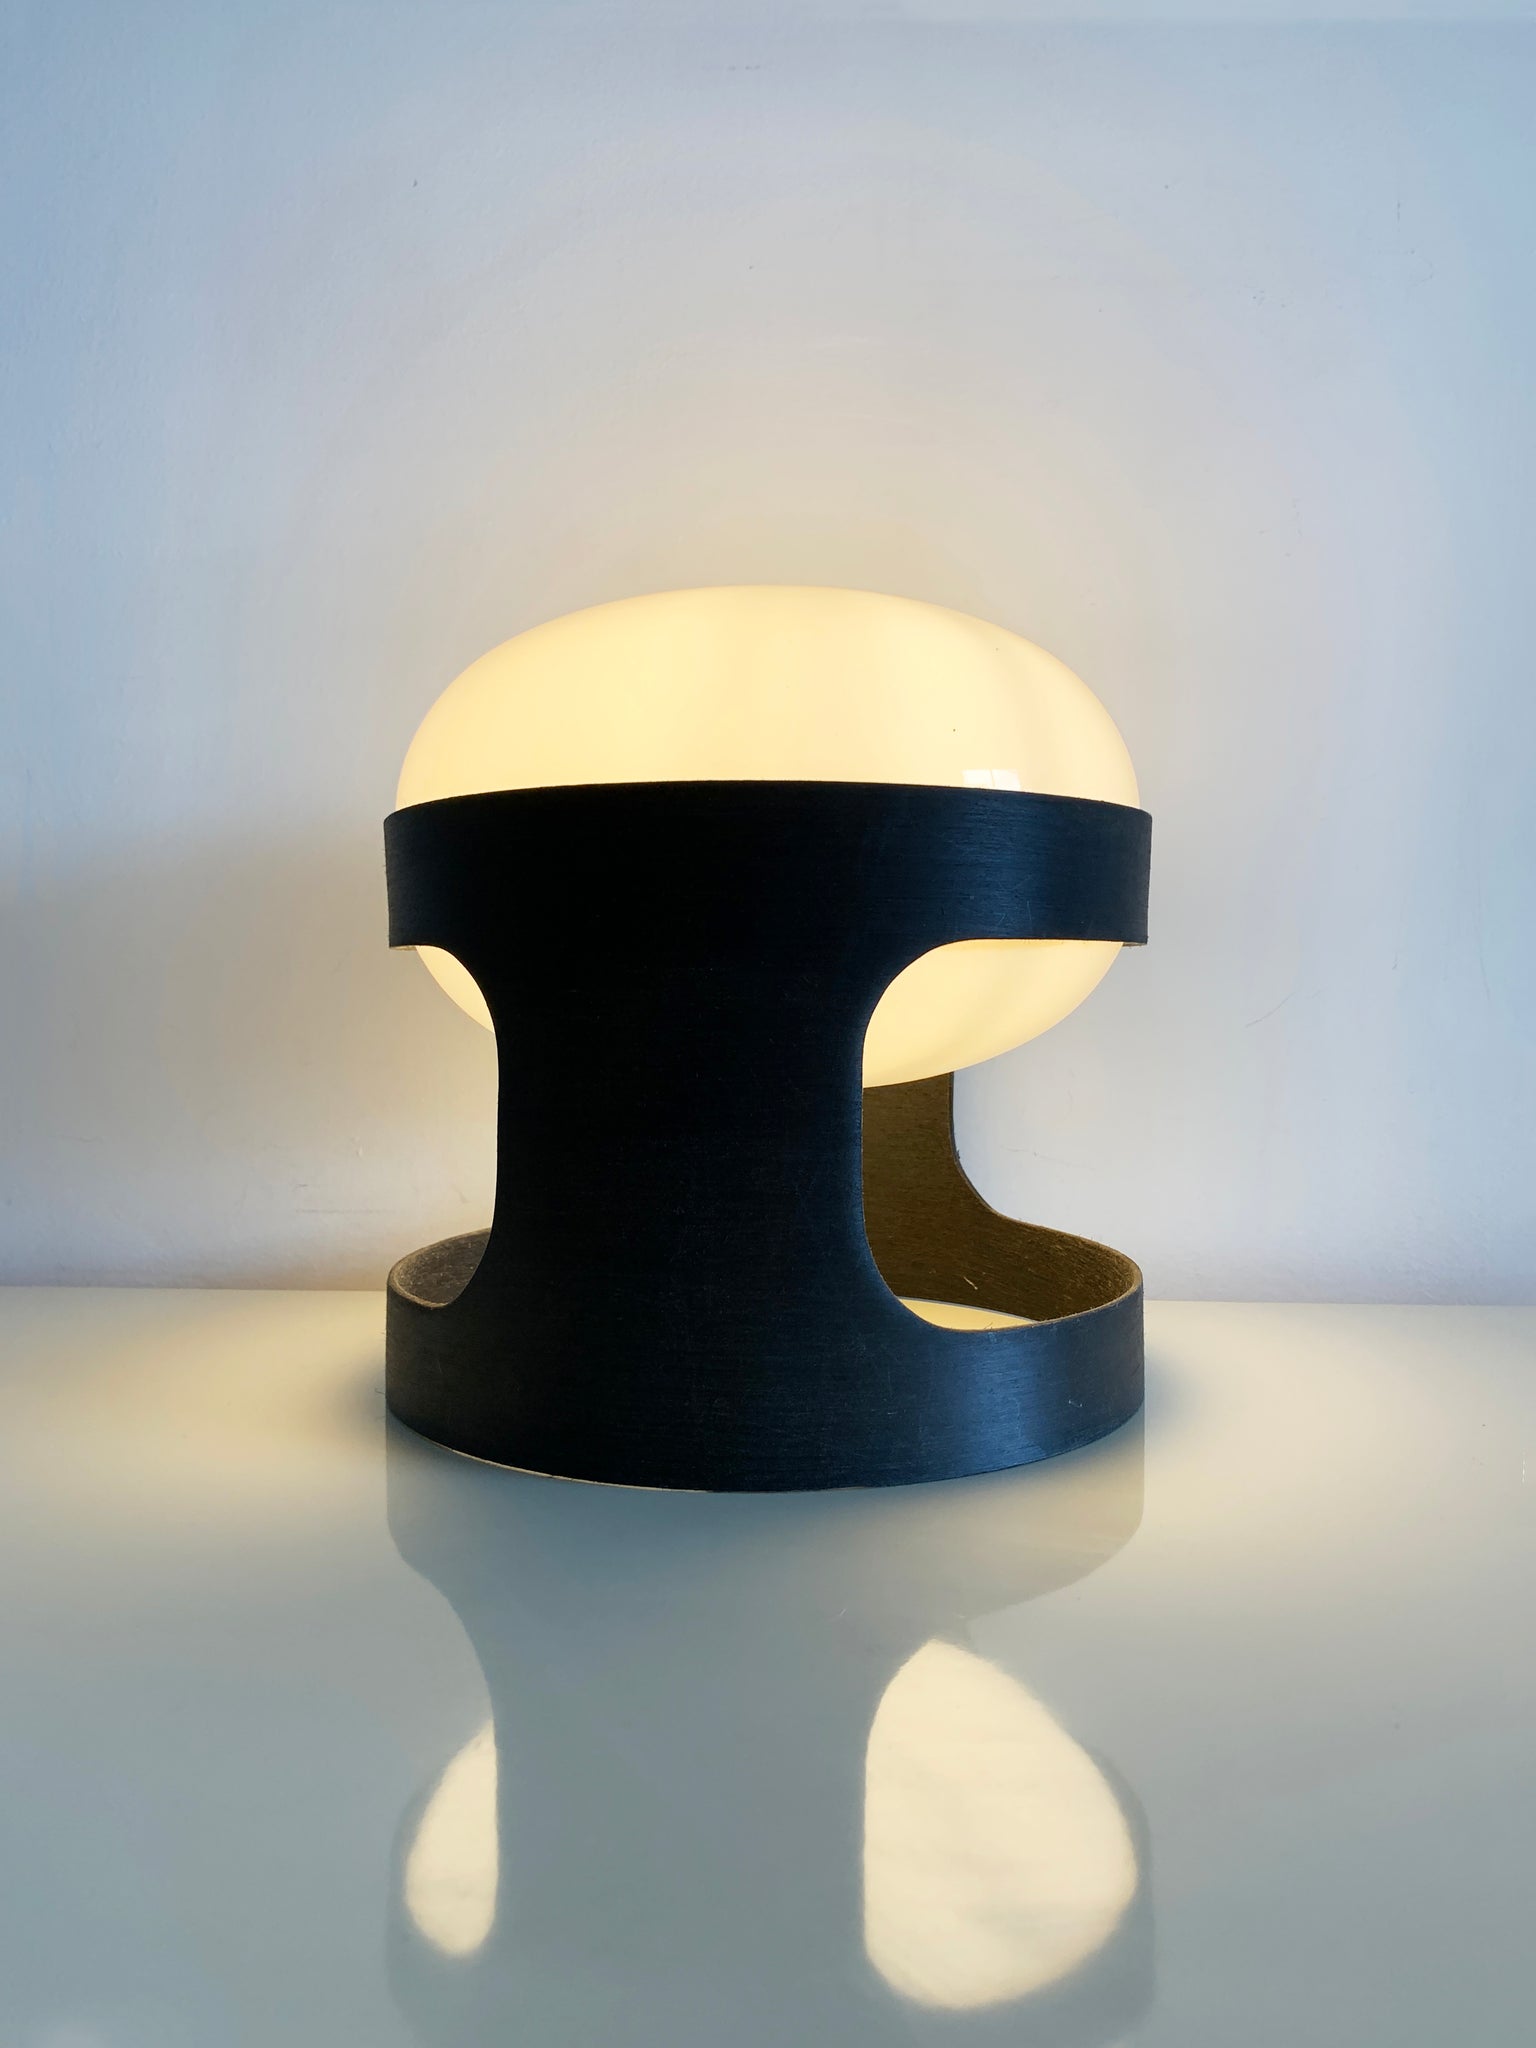 Pre-Production Ebanil KD 27 Table Lamp by Joe Colombo for Kartell